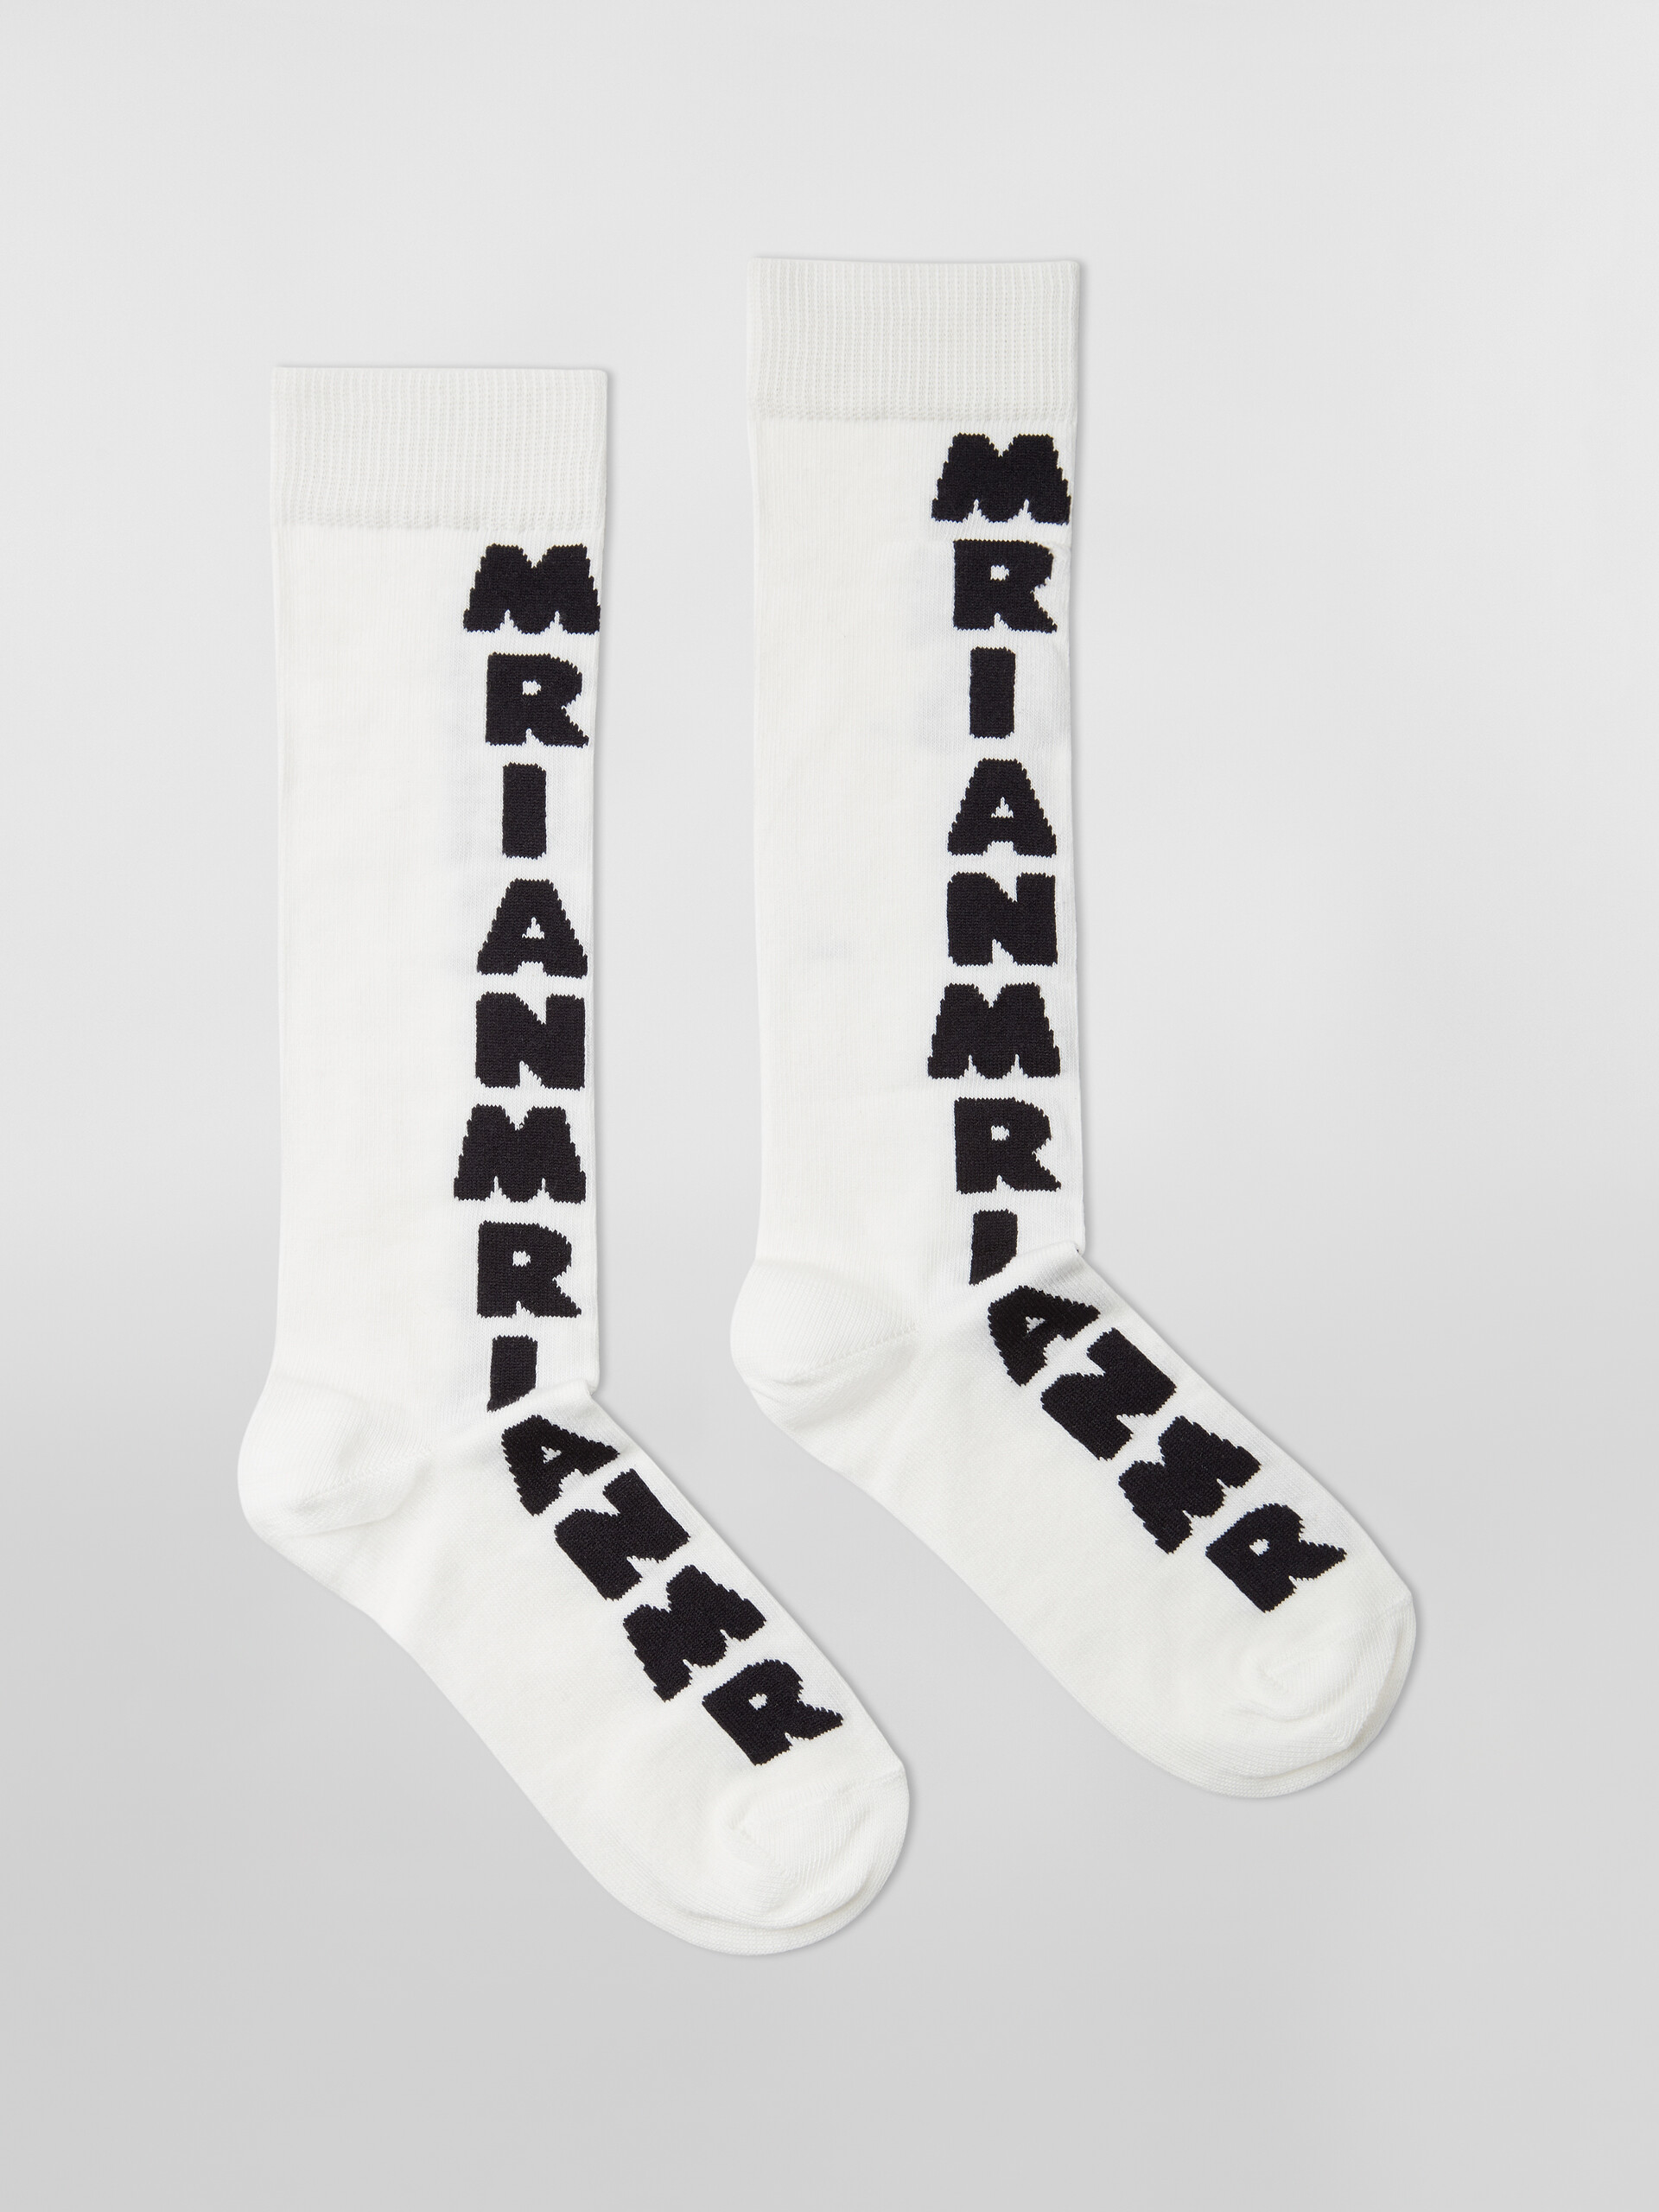 SOCKS WITH ANAGRAM LOGO - Socks - Image 1